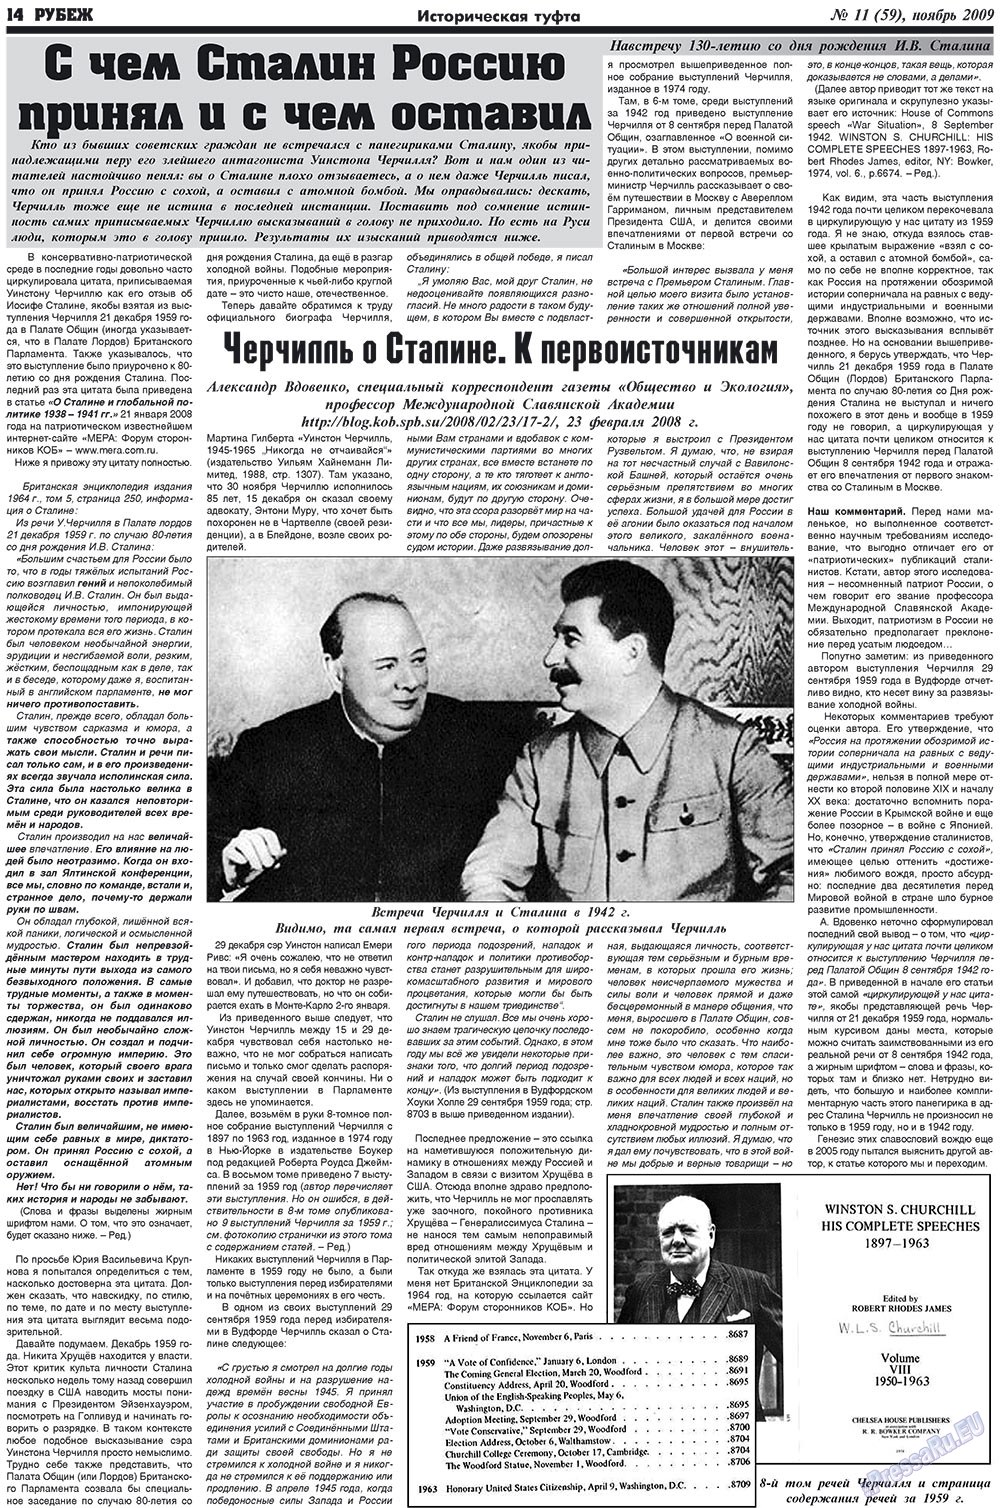 Рубеж, газета. 2009 №11 стр.14